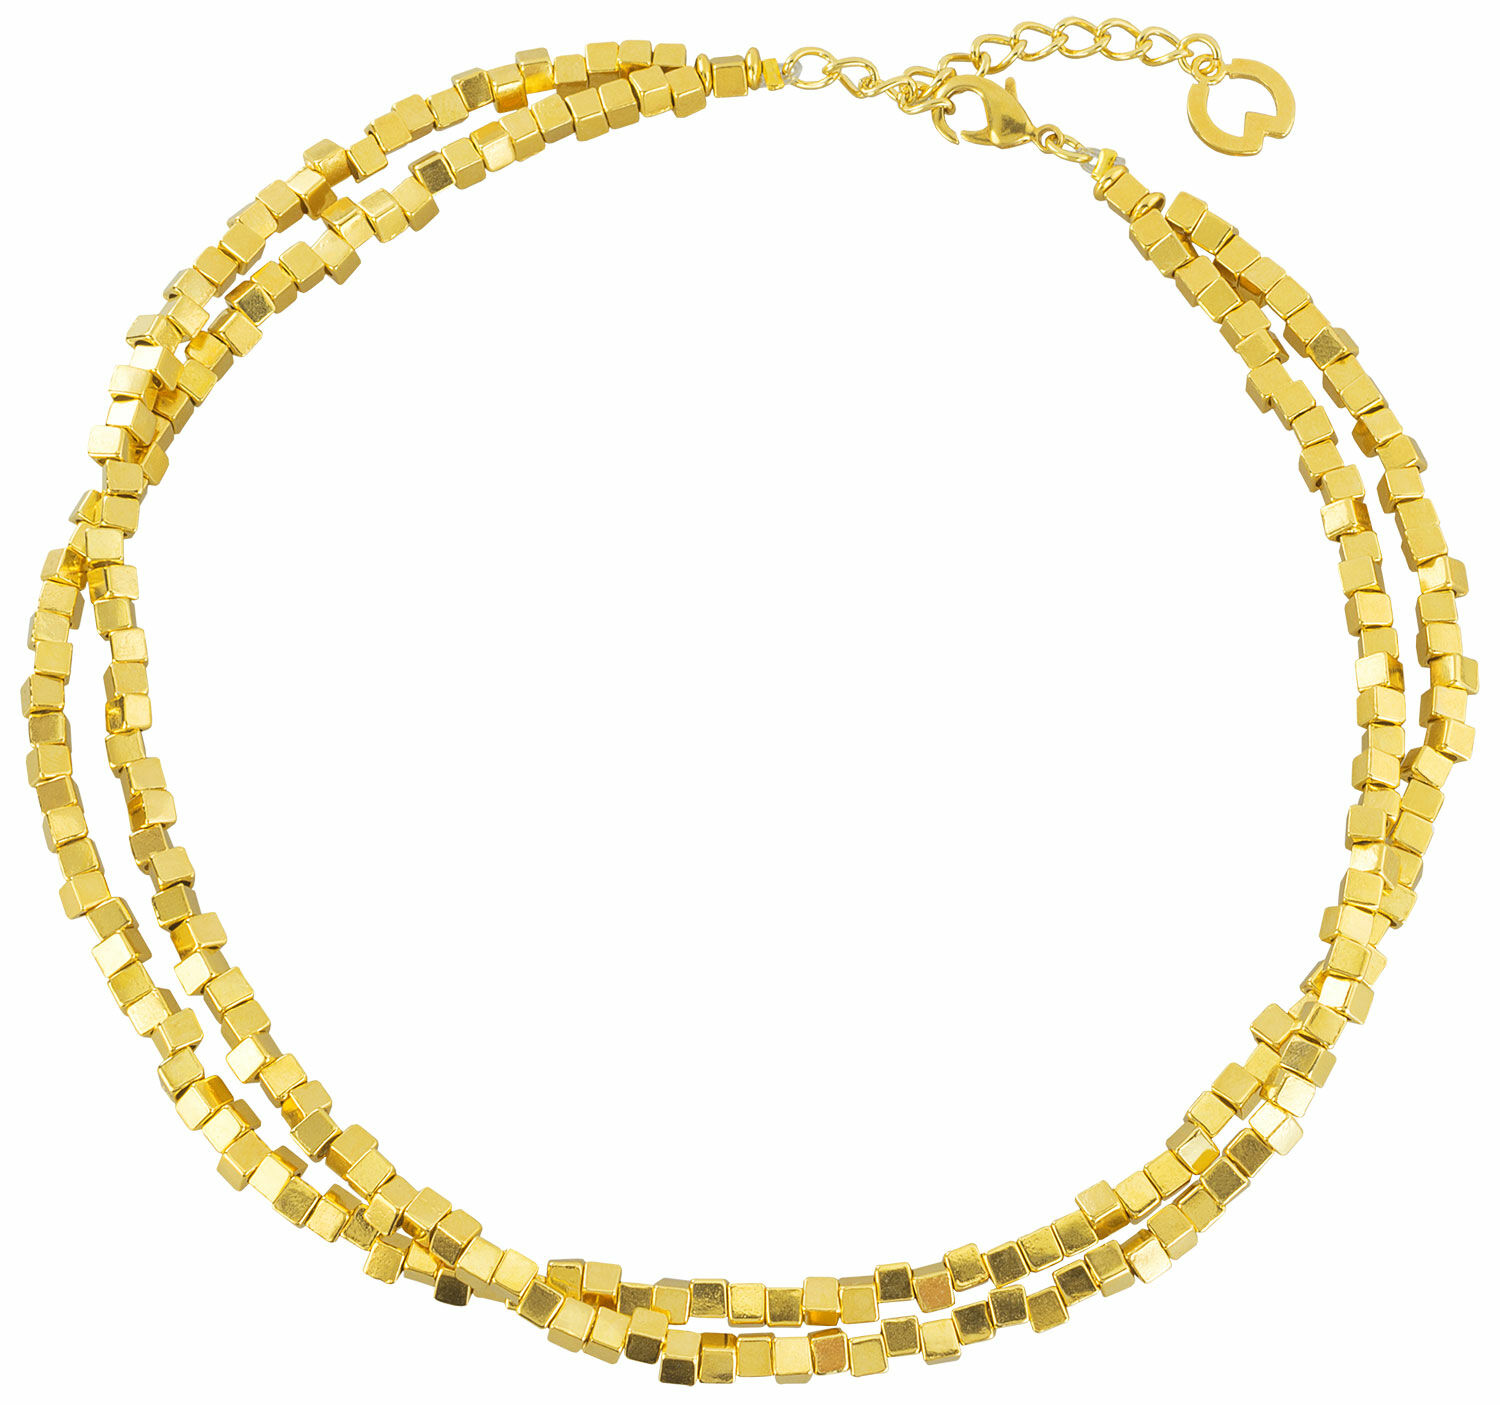 Necklace "Golden Squares" by Petra Waszak